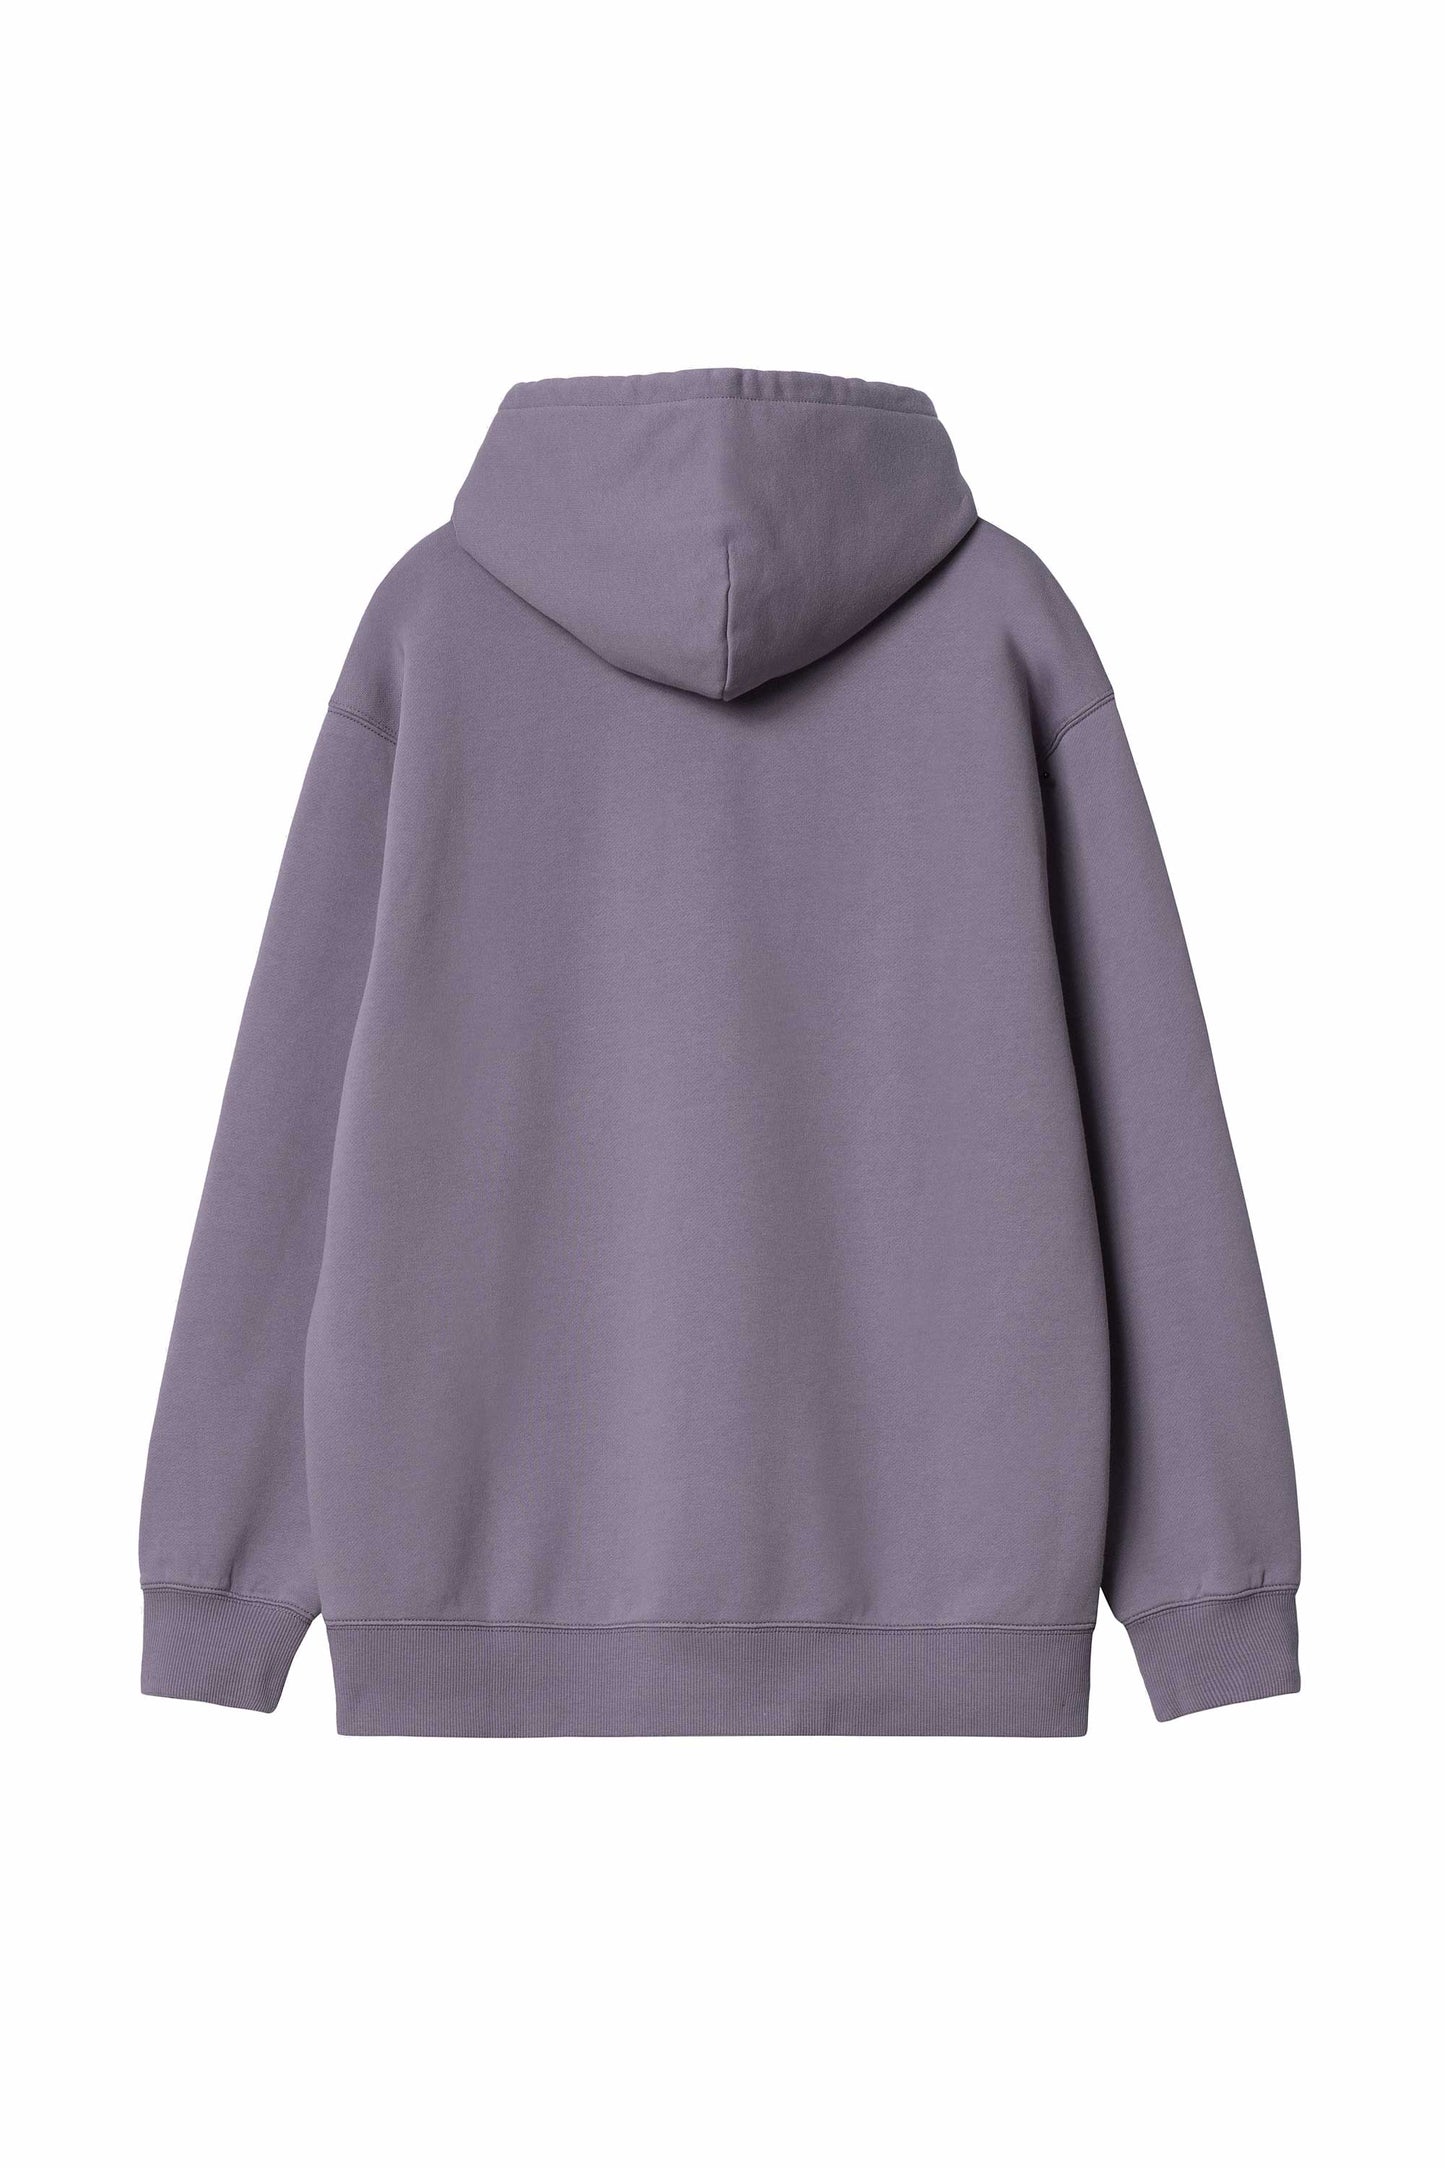 Pukas-Surf-Shop-carhartt-hoodie-sweatshirt-glassy-purple